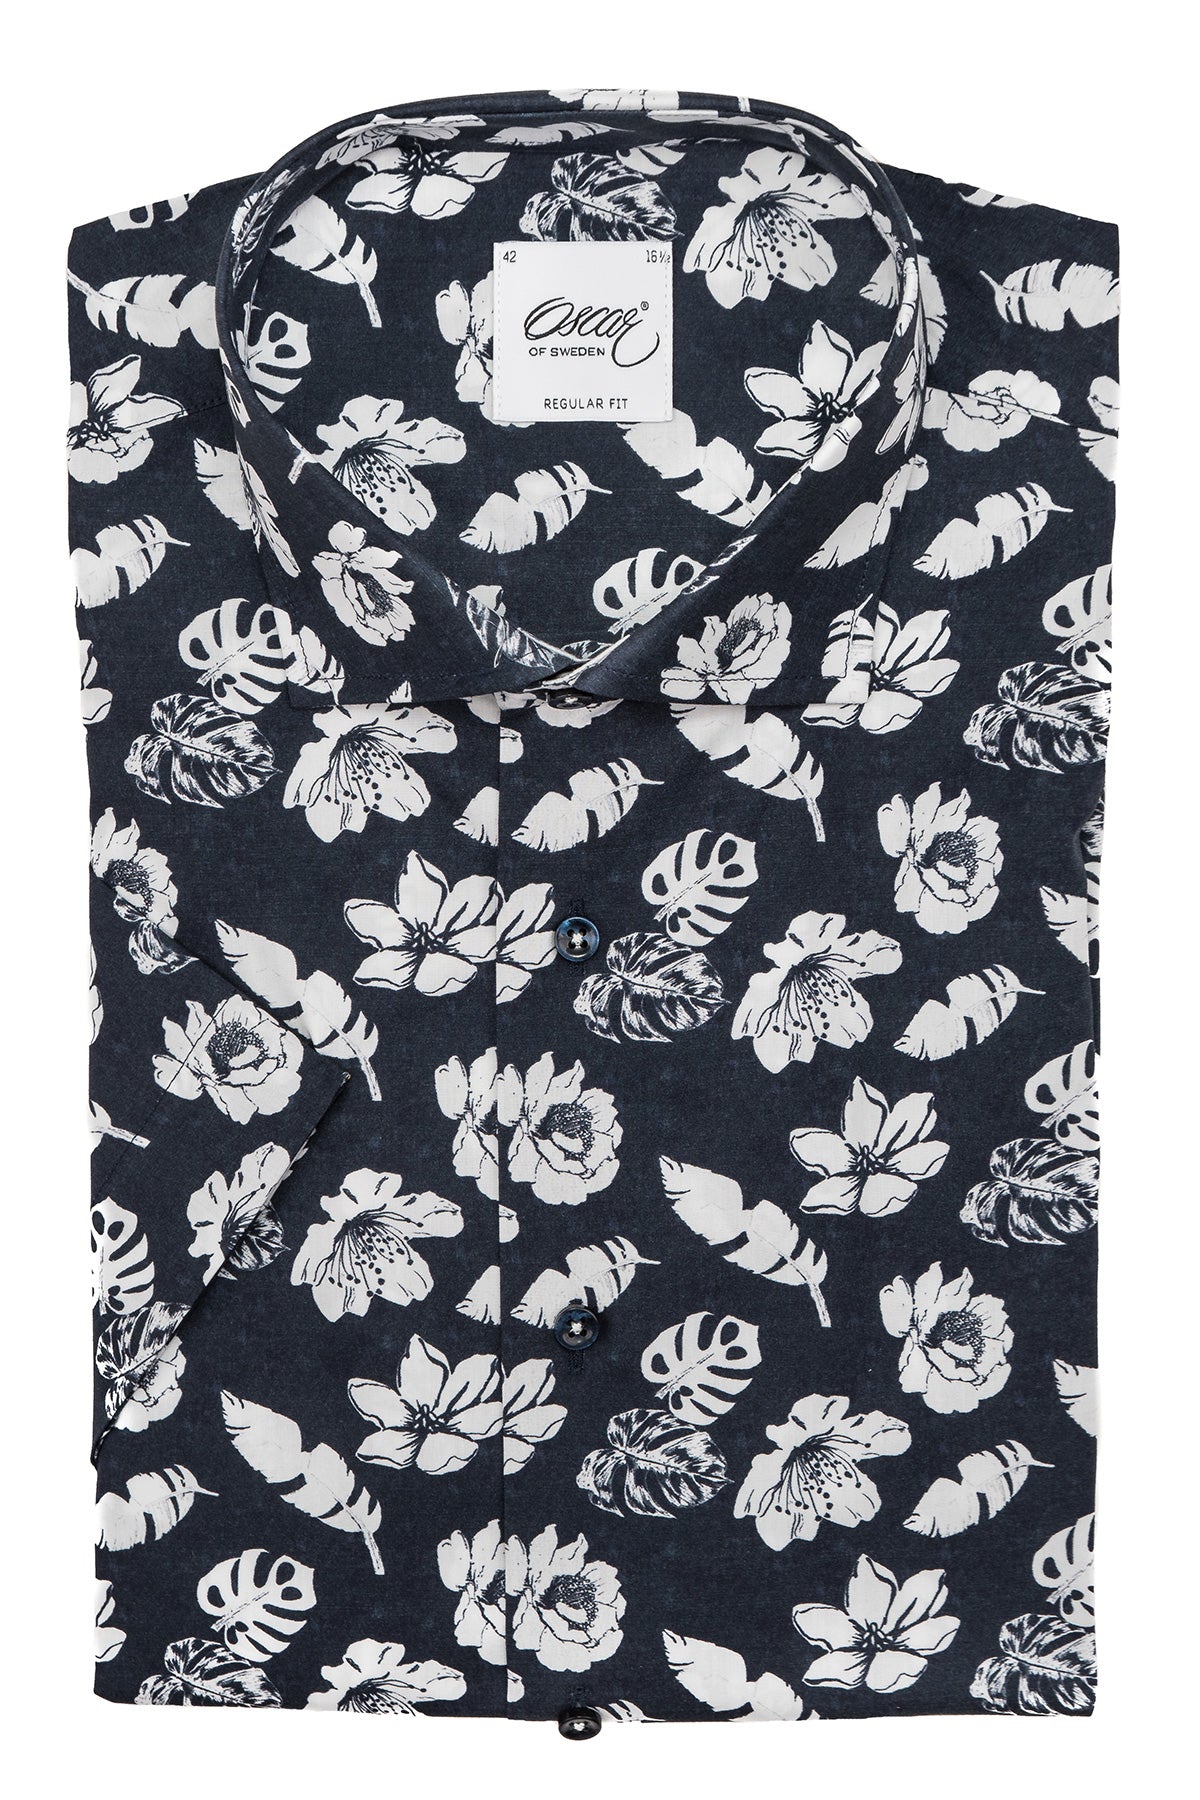 Navy blue flower printed short sleeve regular fit shirt